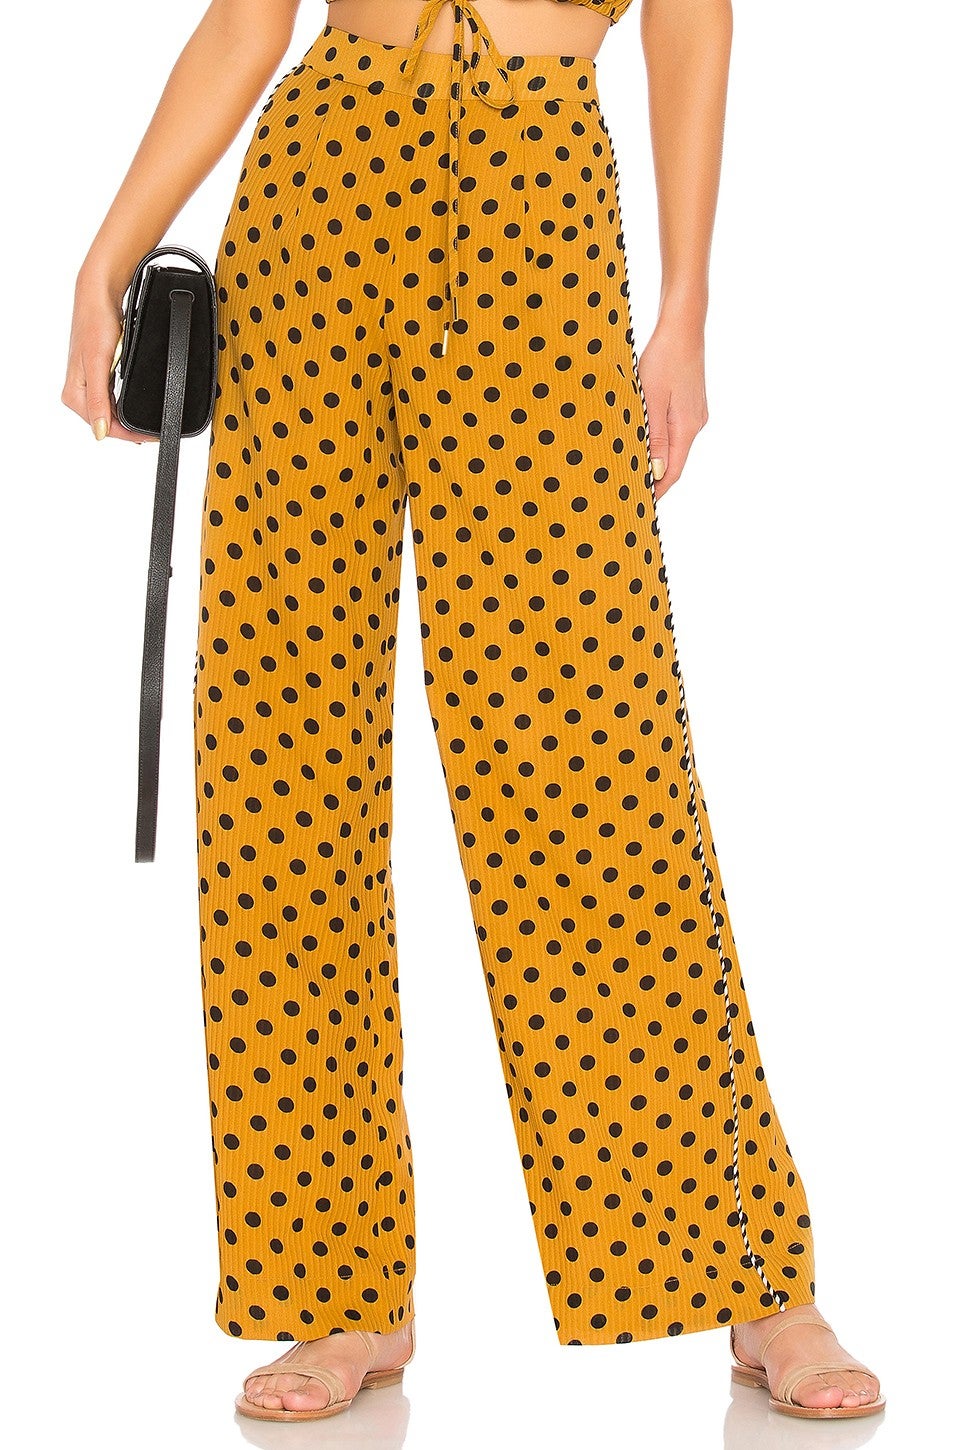 House of Harlow yellow polka dot trouser